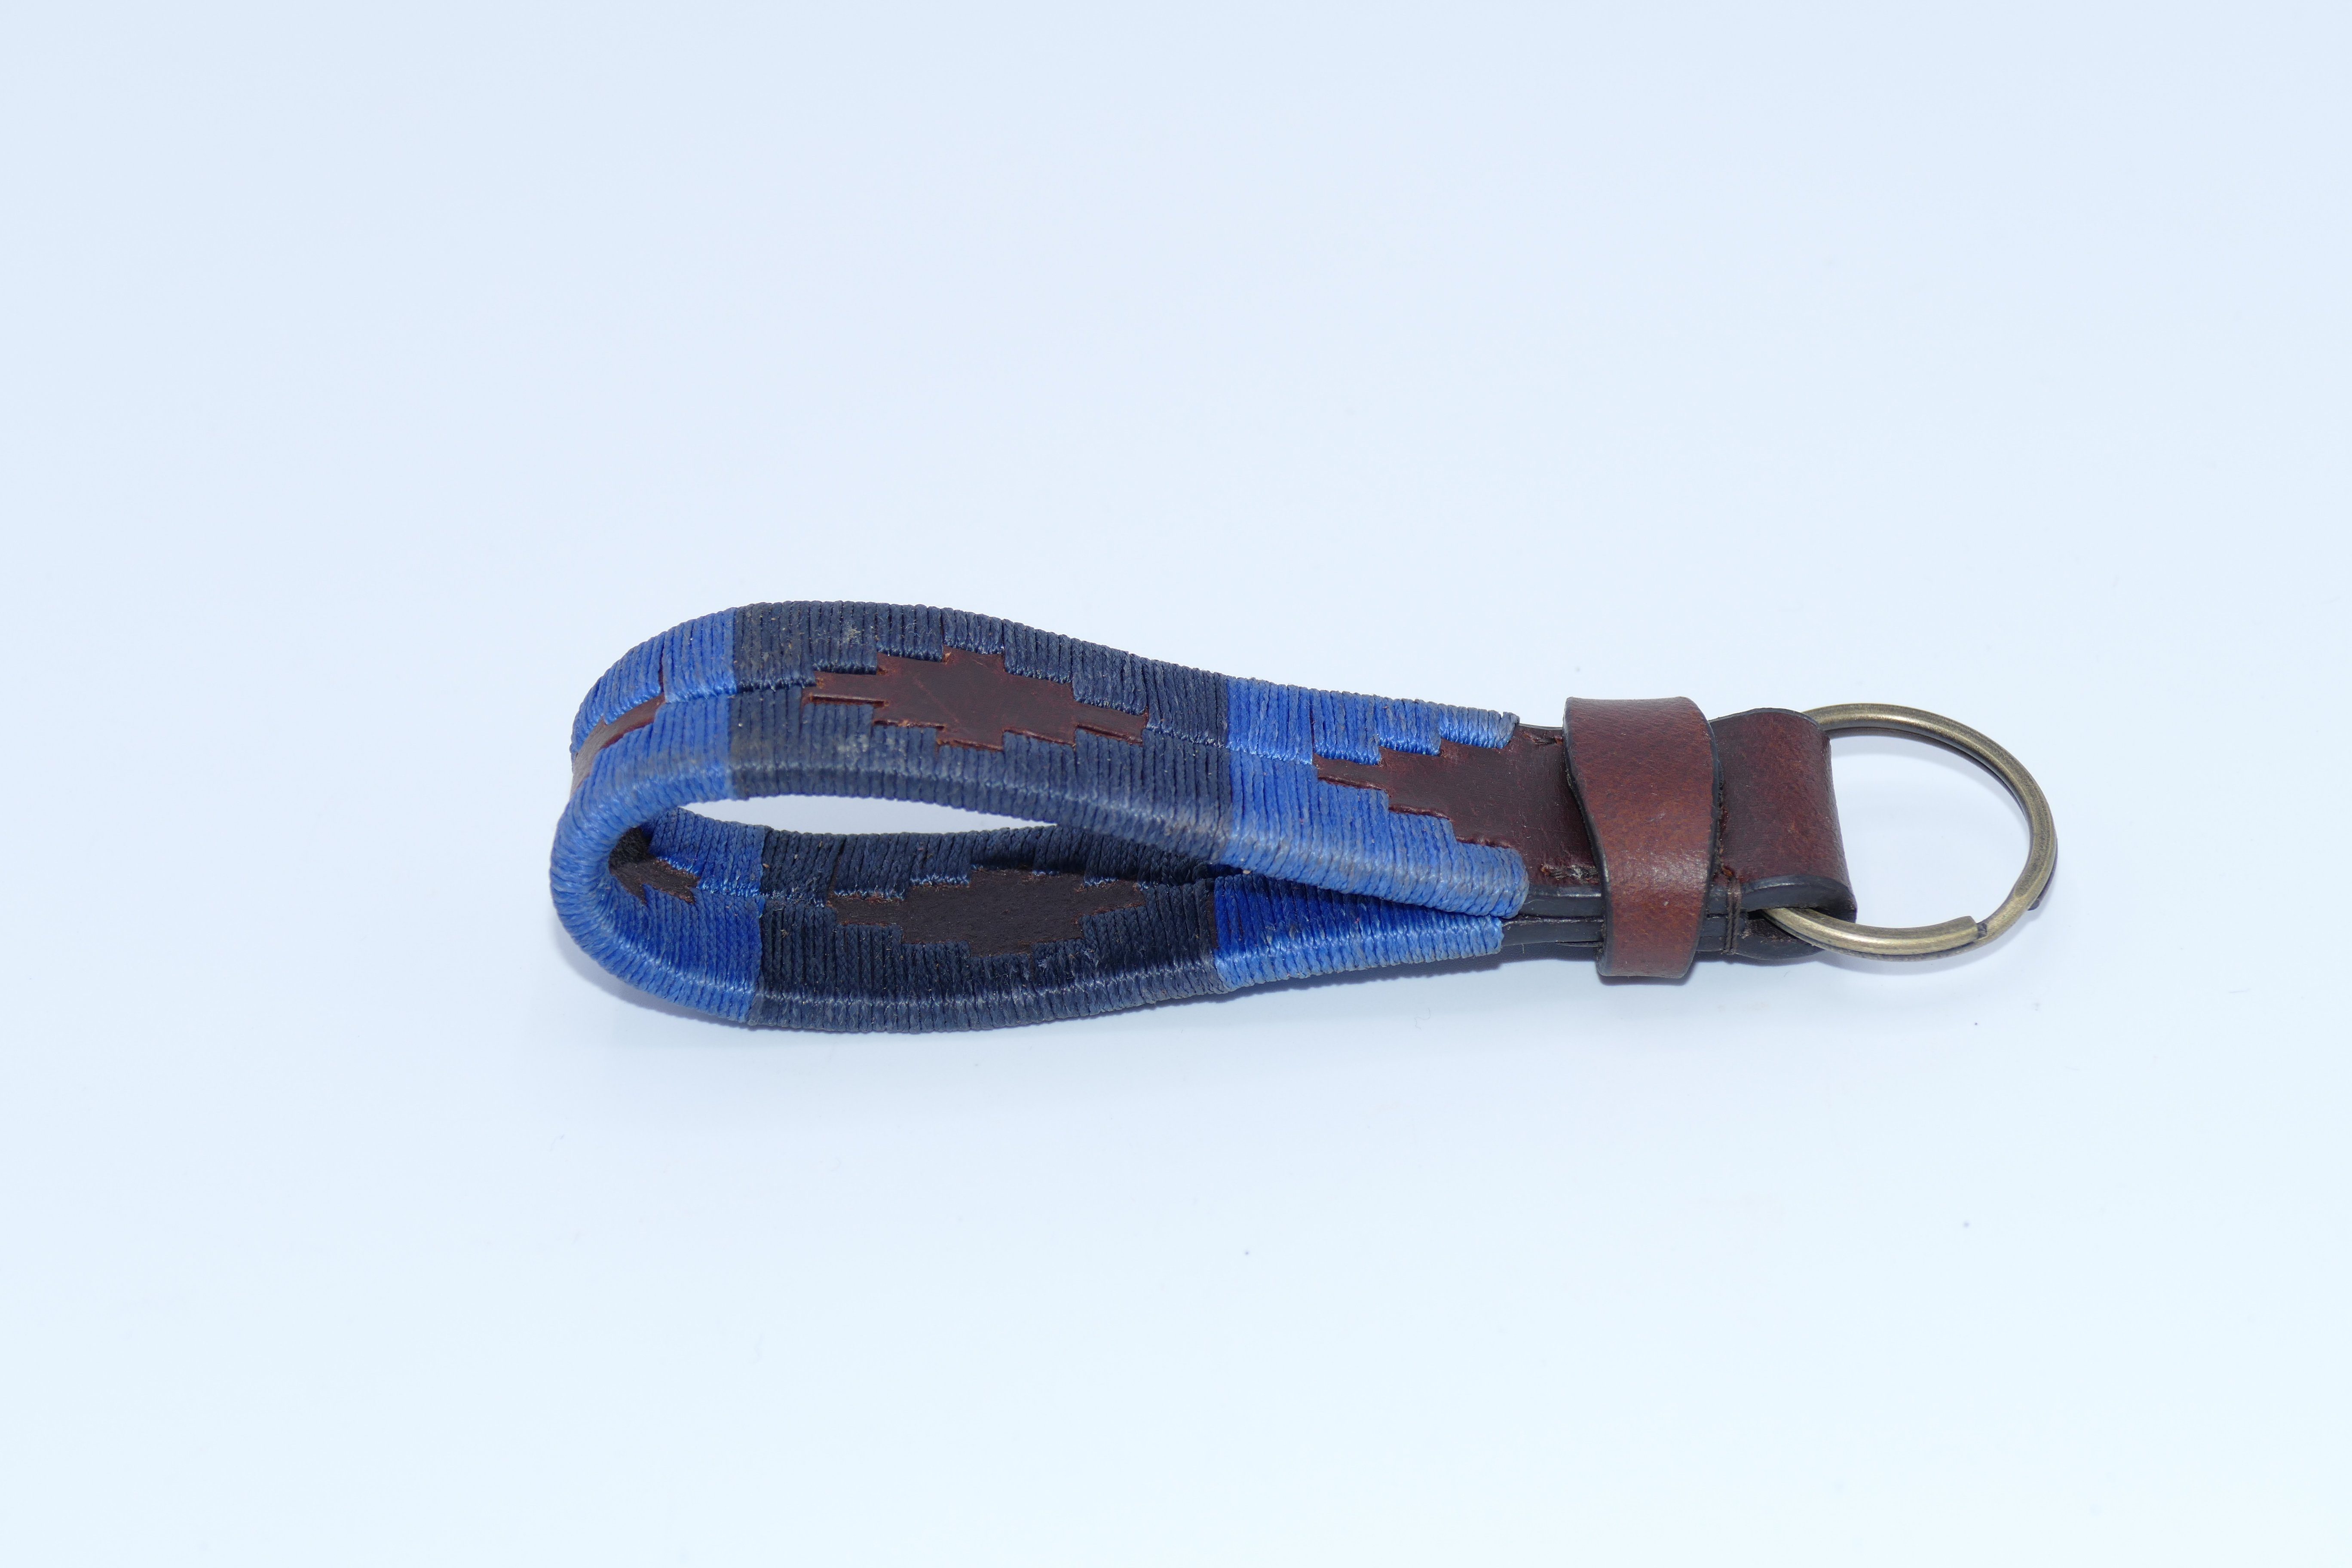 Kipita Schlüsselanhänger Hochwertig bestickter Polo Argentinisches Schlüsselanhänger, Design, Leder, echtes echtes Leder Noble